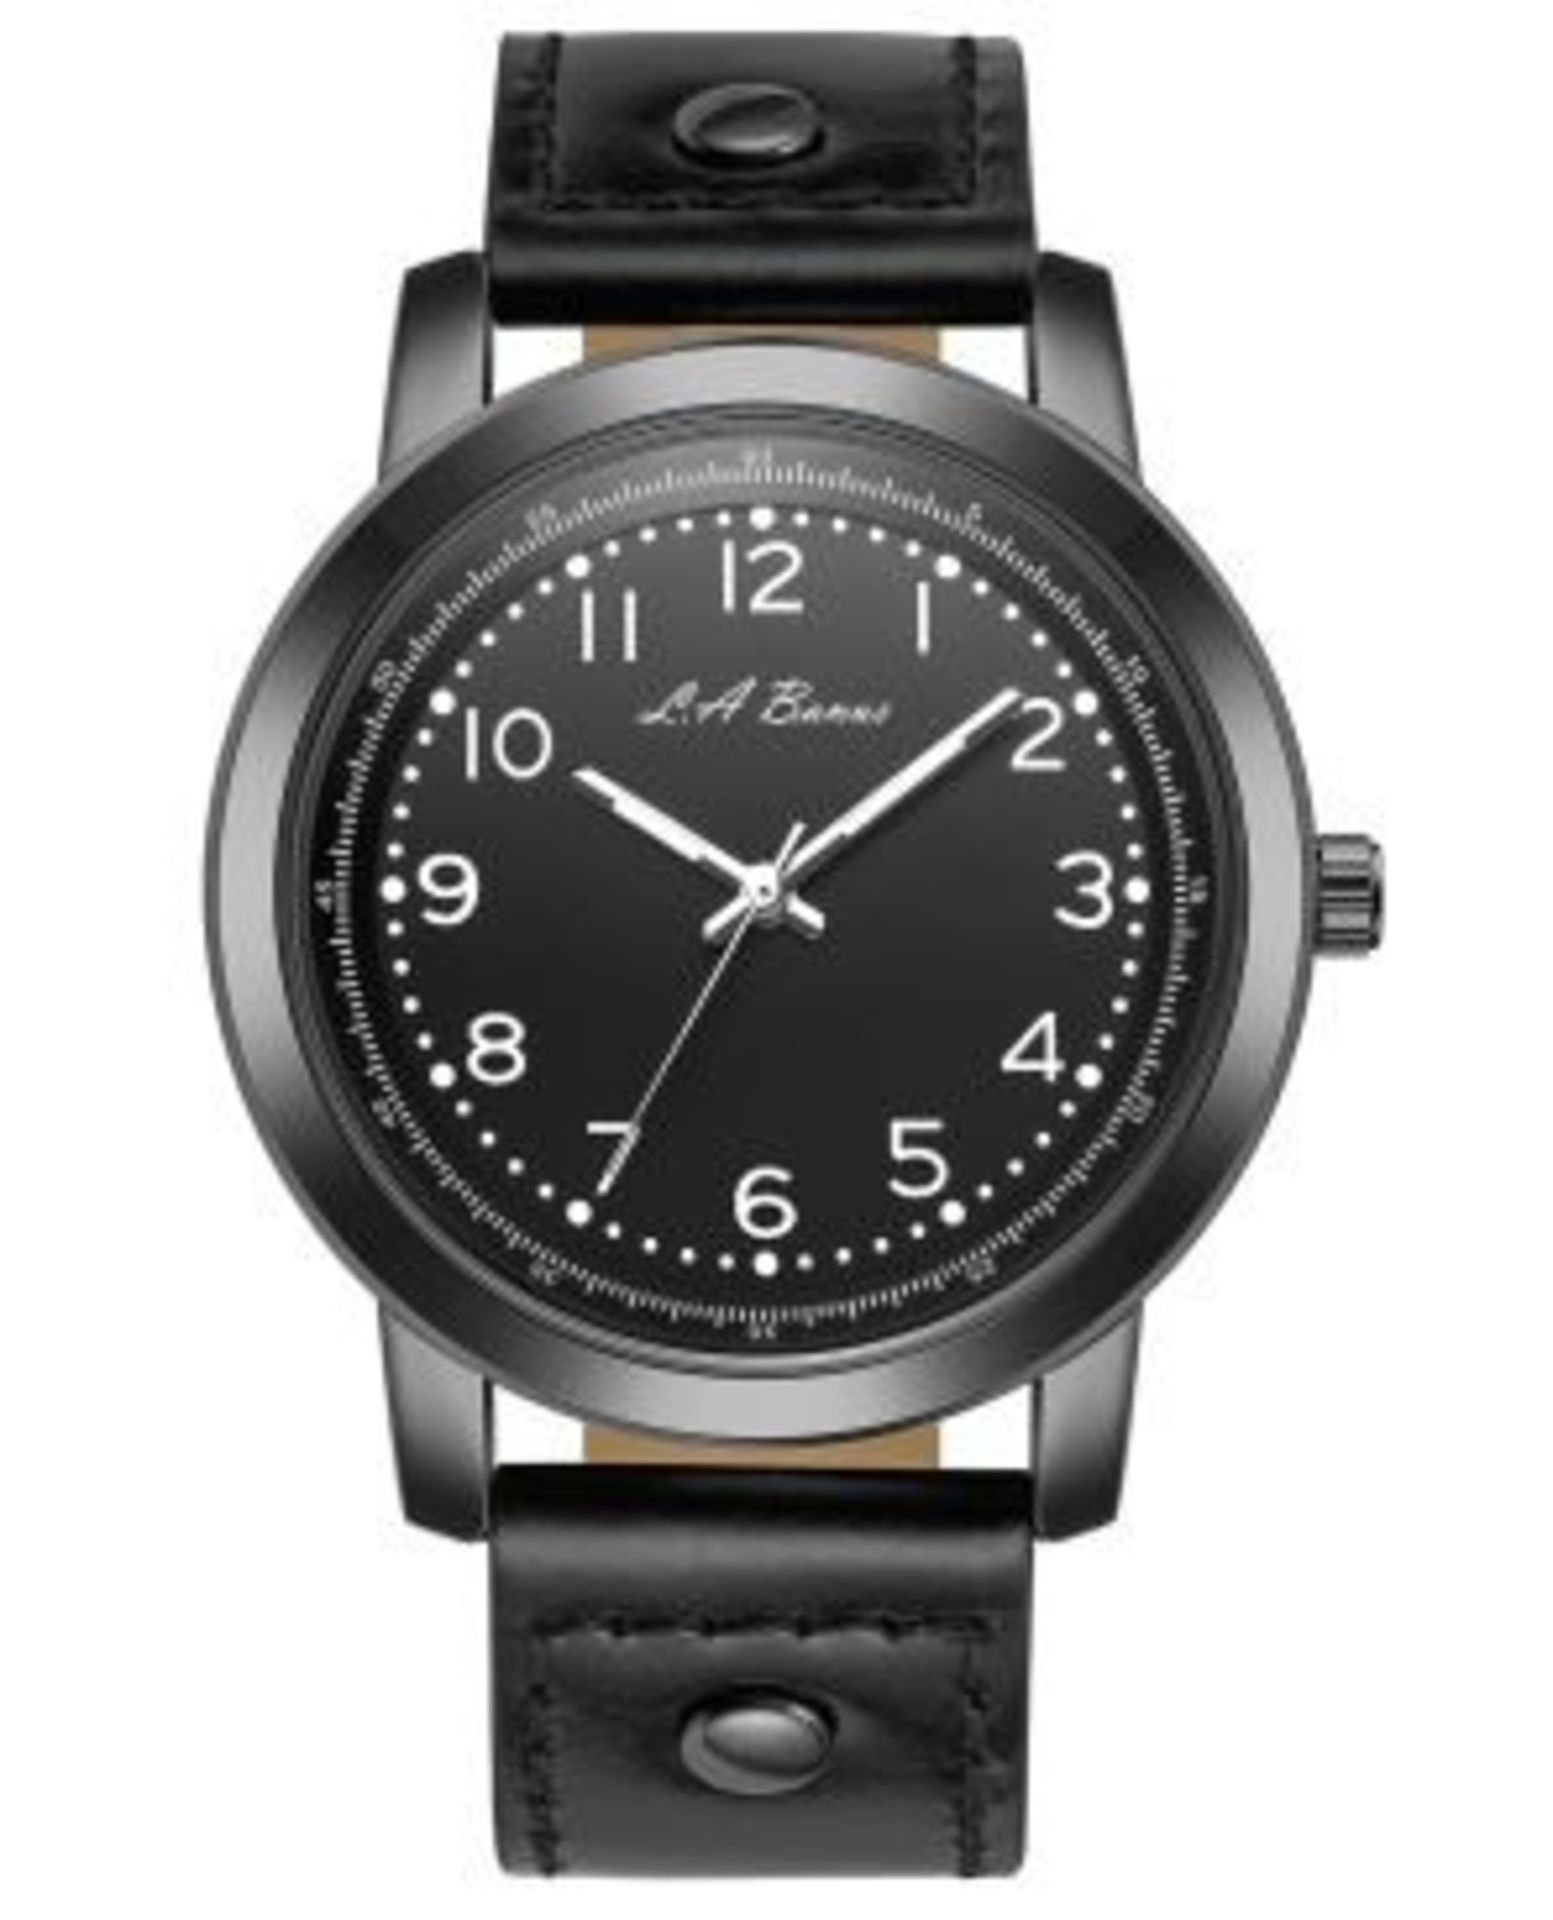 Men’s LA Banus Field watch, black dial, black leather strap. RRP £399